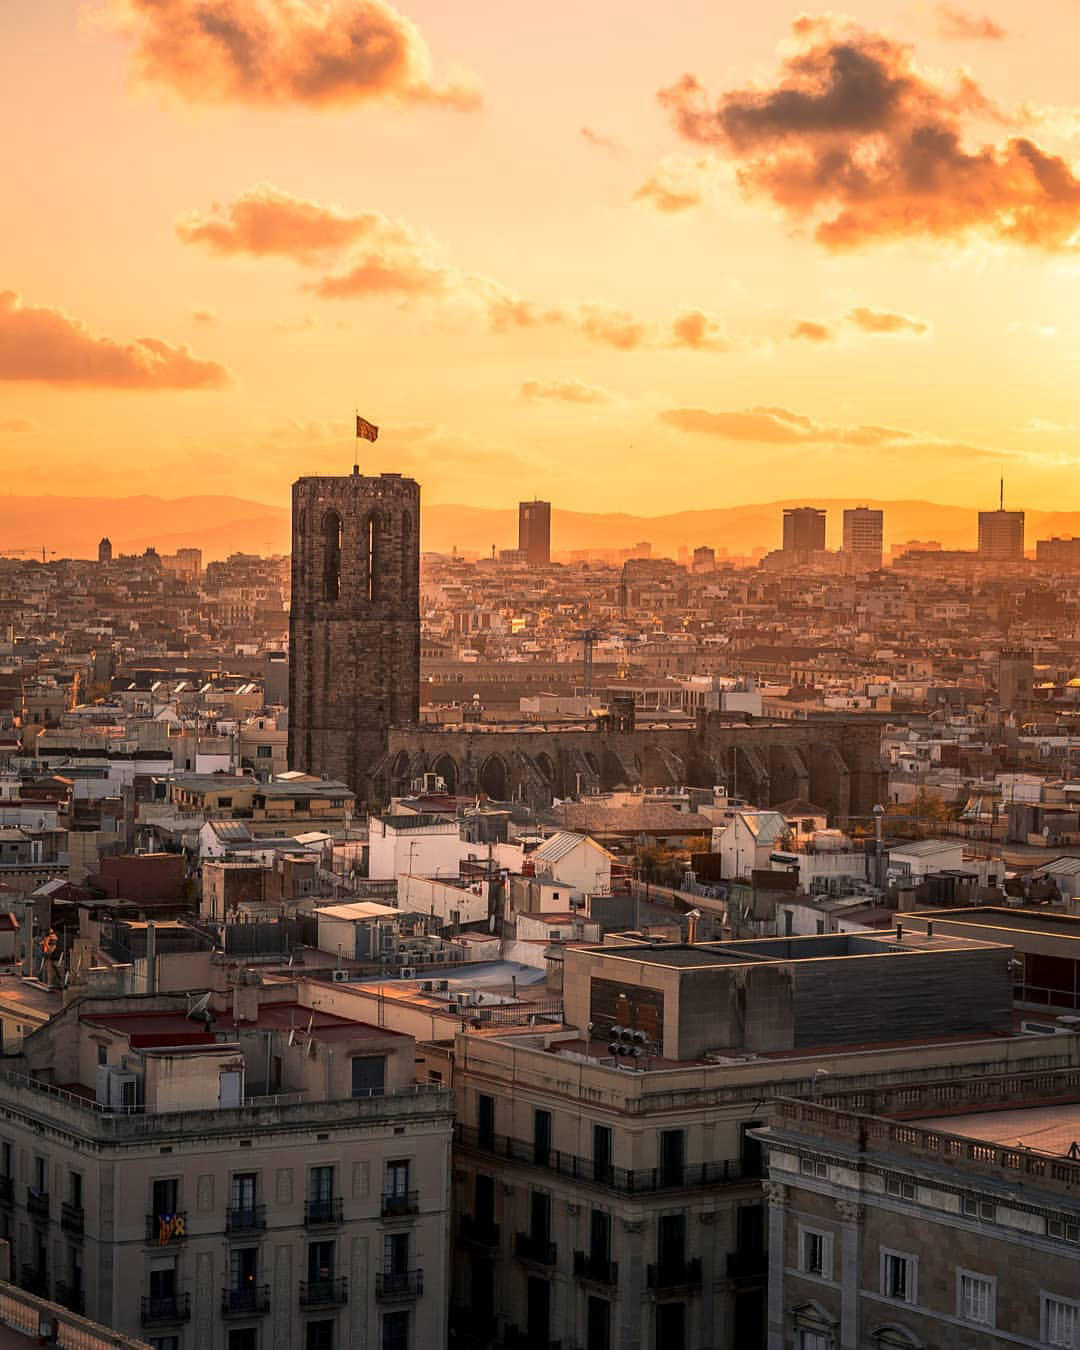 image  1 Barcelona - Santa Maria del Pi and Sagrada Familia looking perfect during this golden sunset